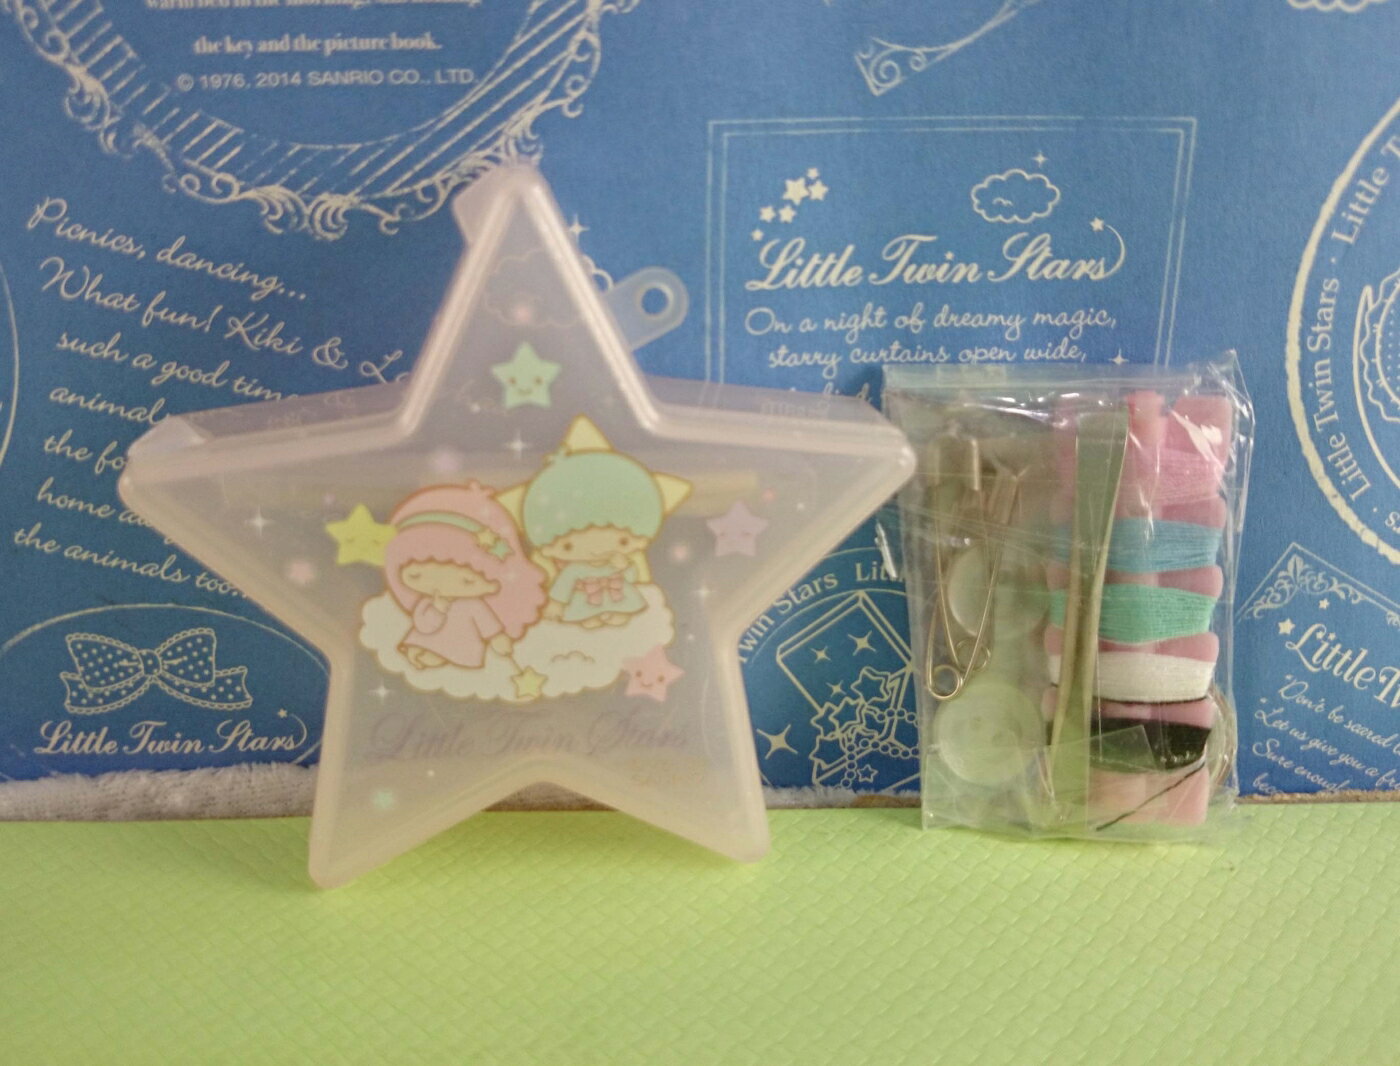 【震撼精品百貨】Little Twin Stars KiKi&LaLa 雙子星小天使 針線 震撼日式精品百貨